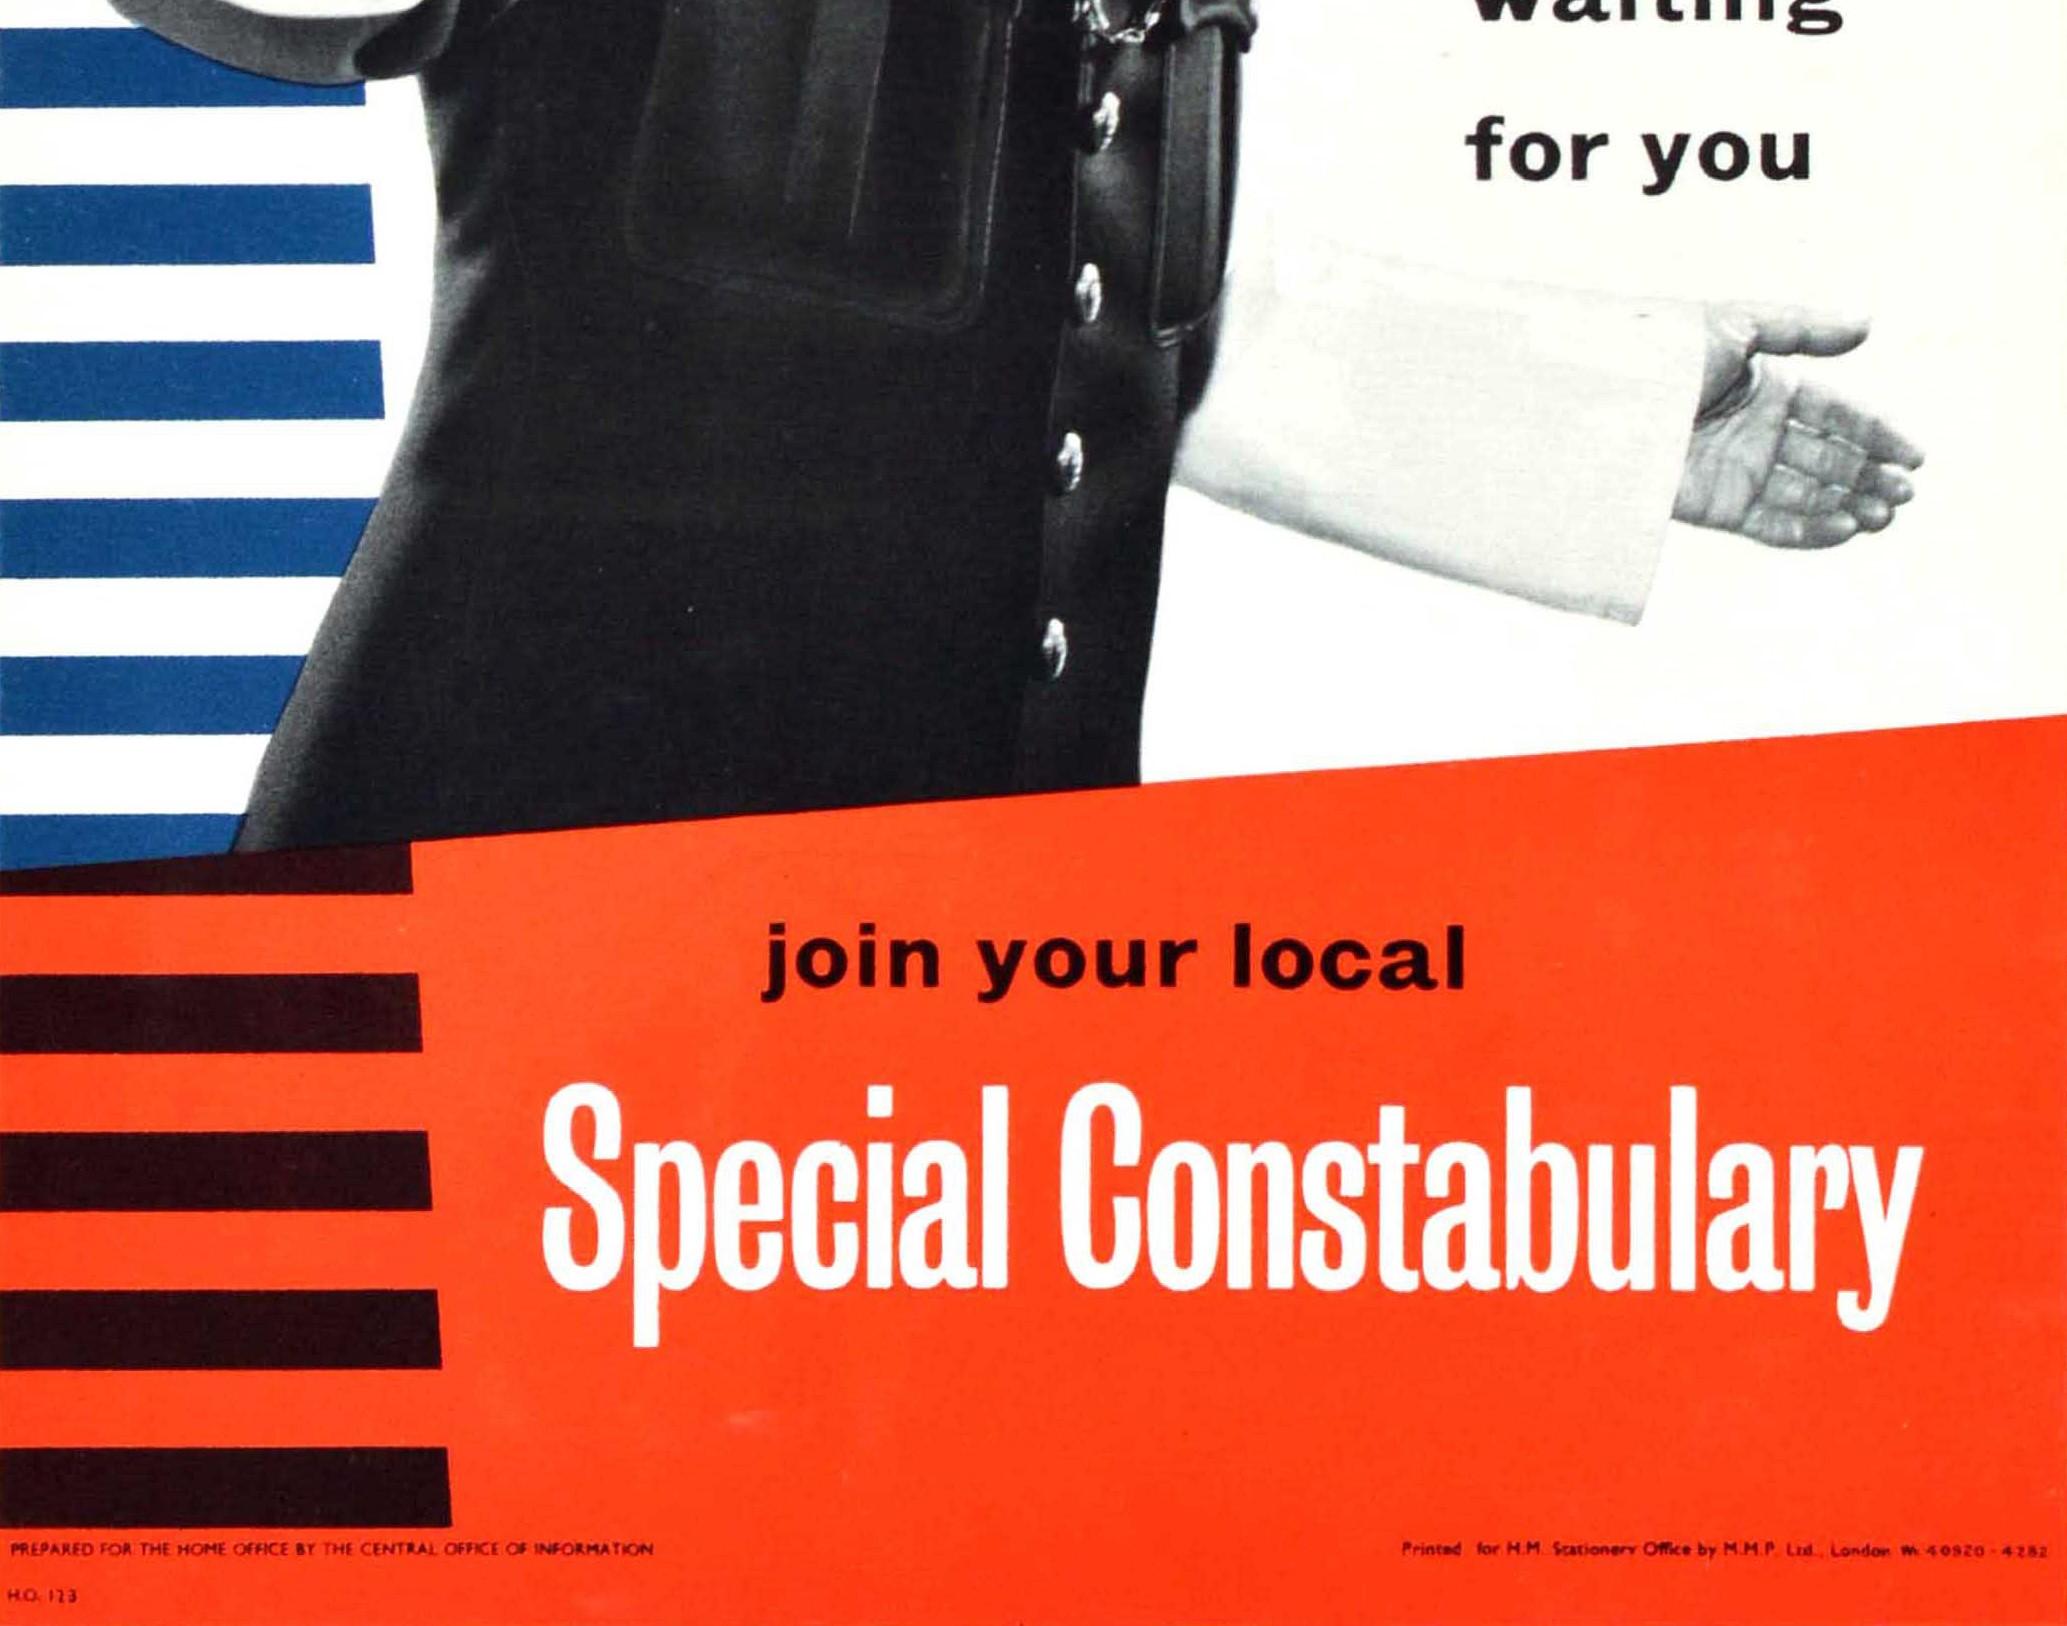 vintage police posters